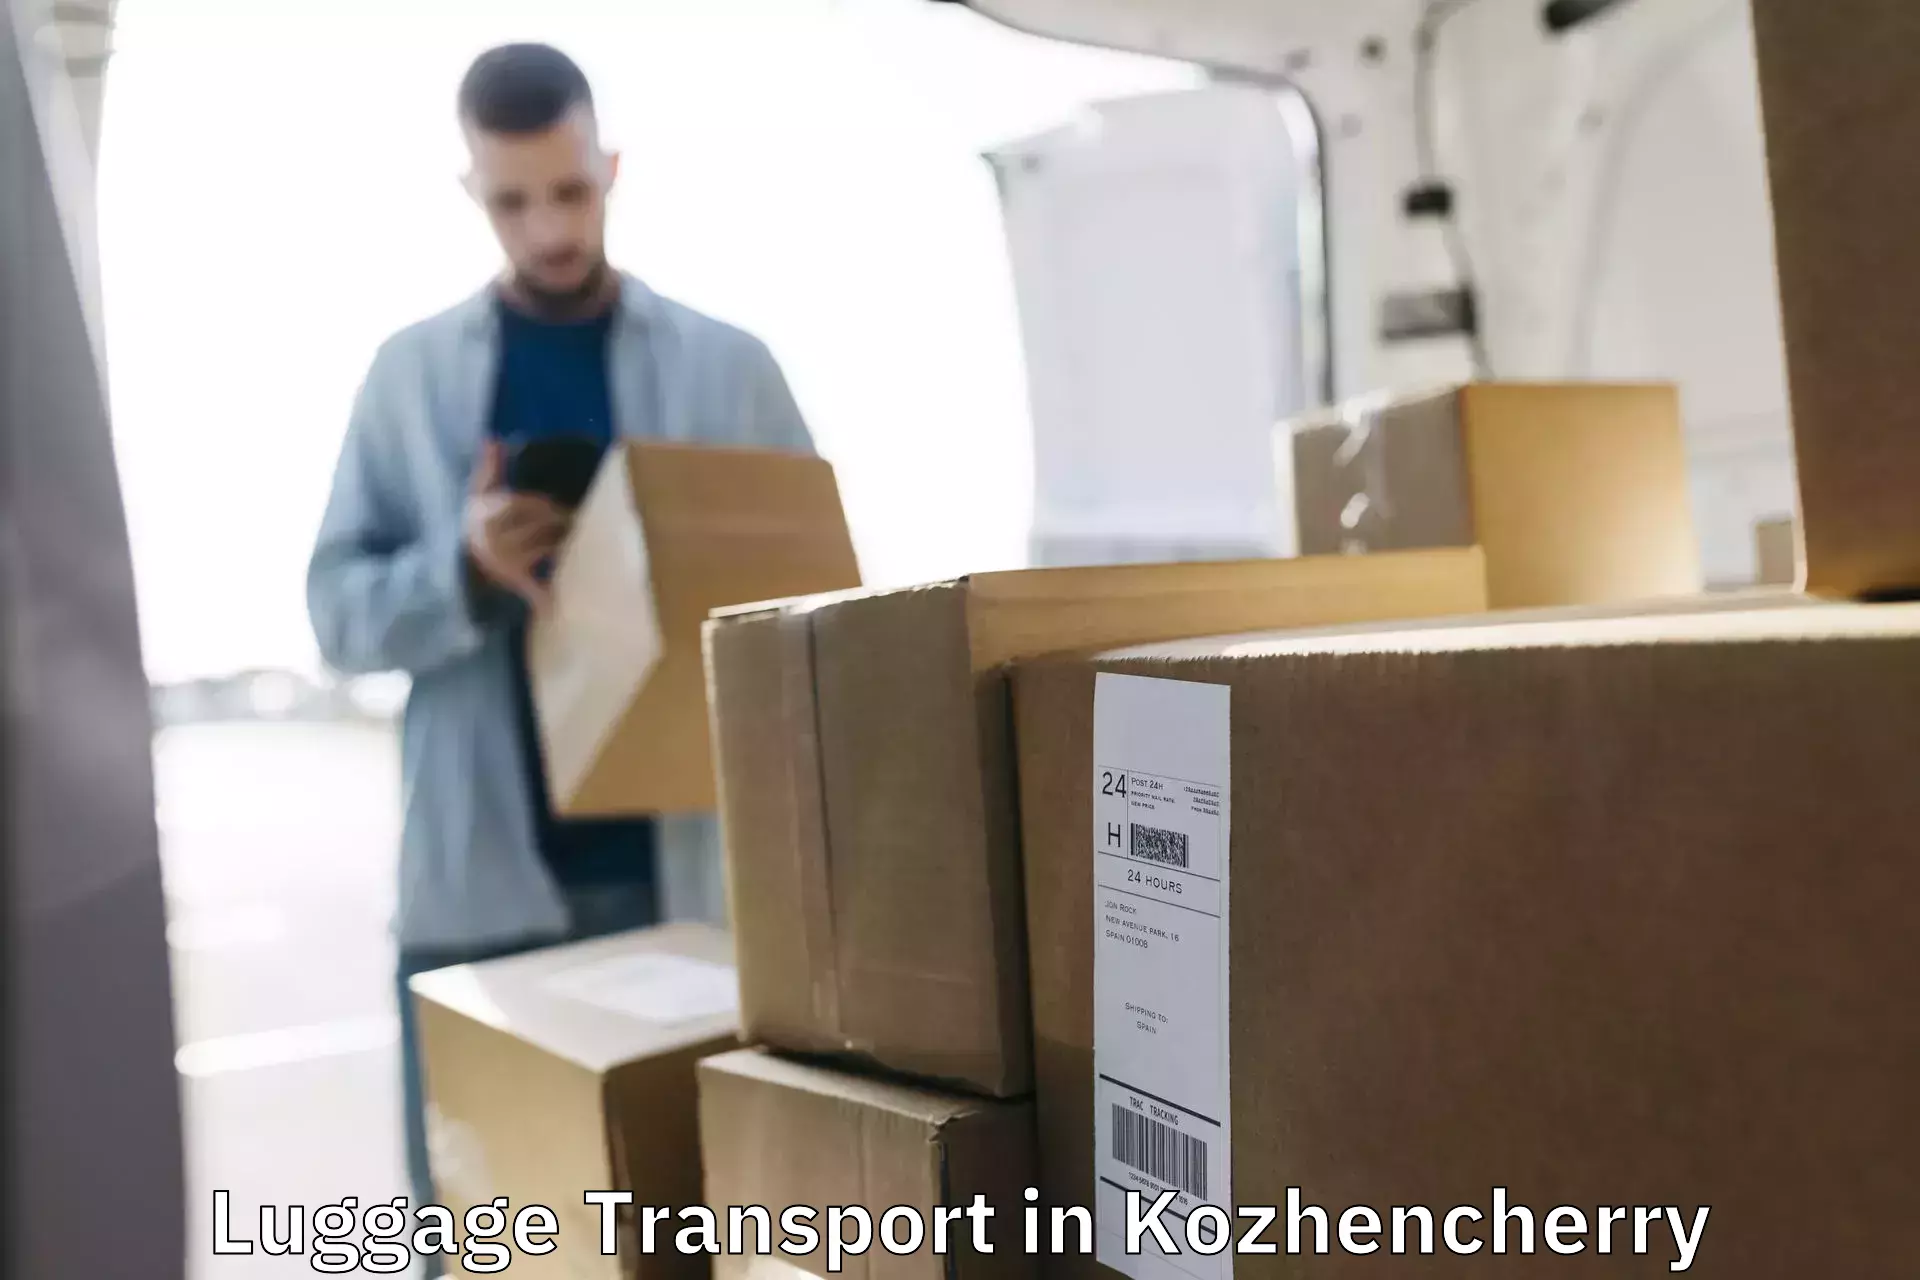 Luggage forwarding service in Kozhencherry